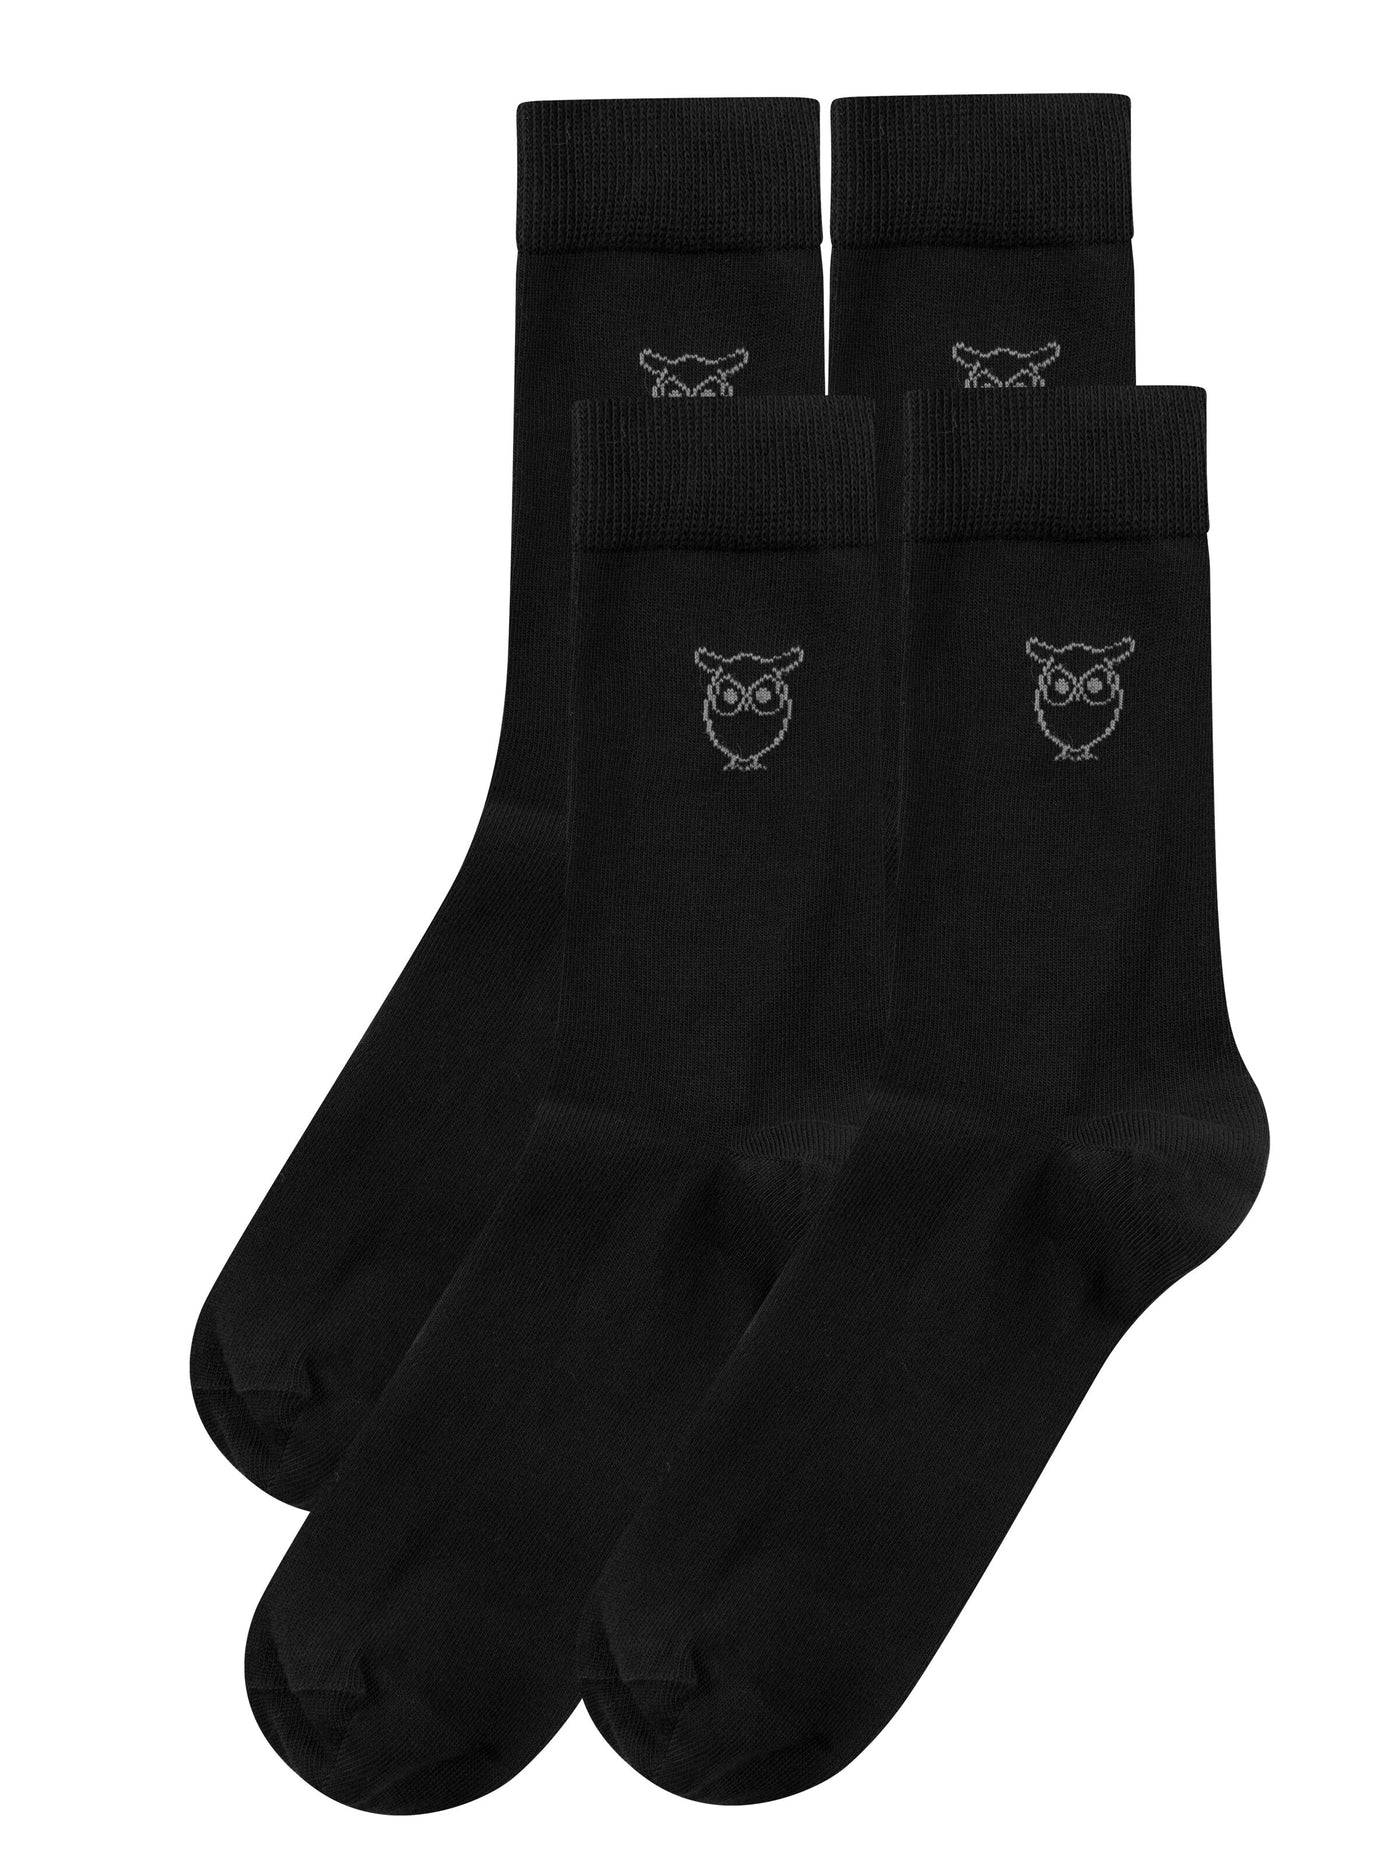 Socken 4-pack Solid Socks Black Jet von Knowledge Cotton Apparel.